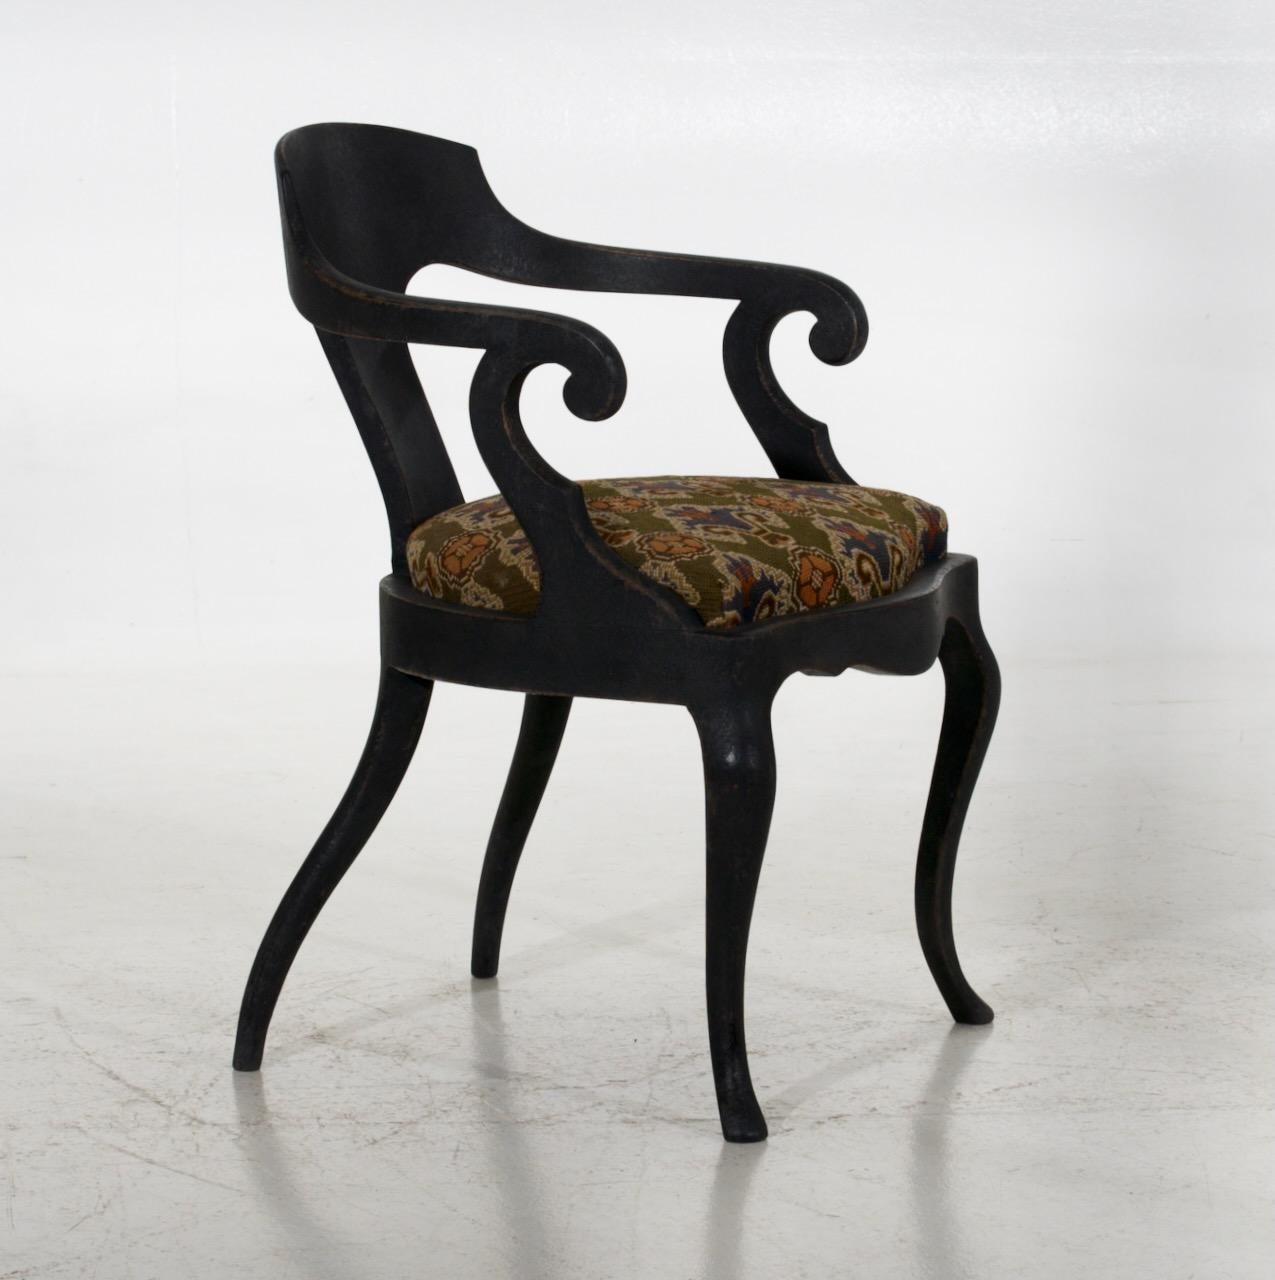 Danish armchair in black with original fabric, circa 1850.